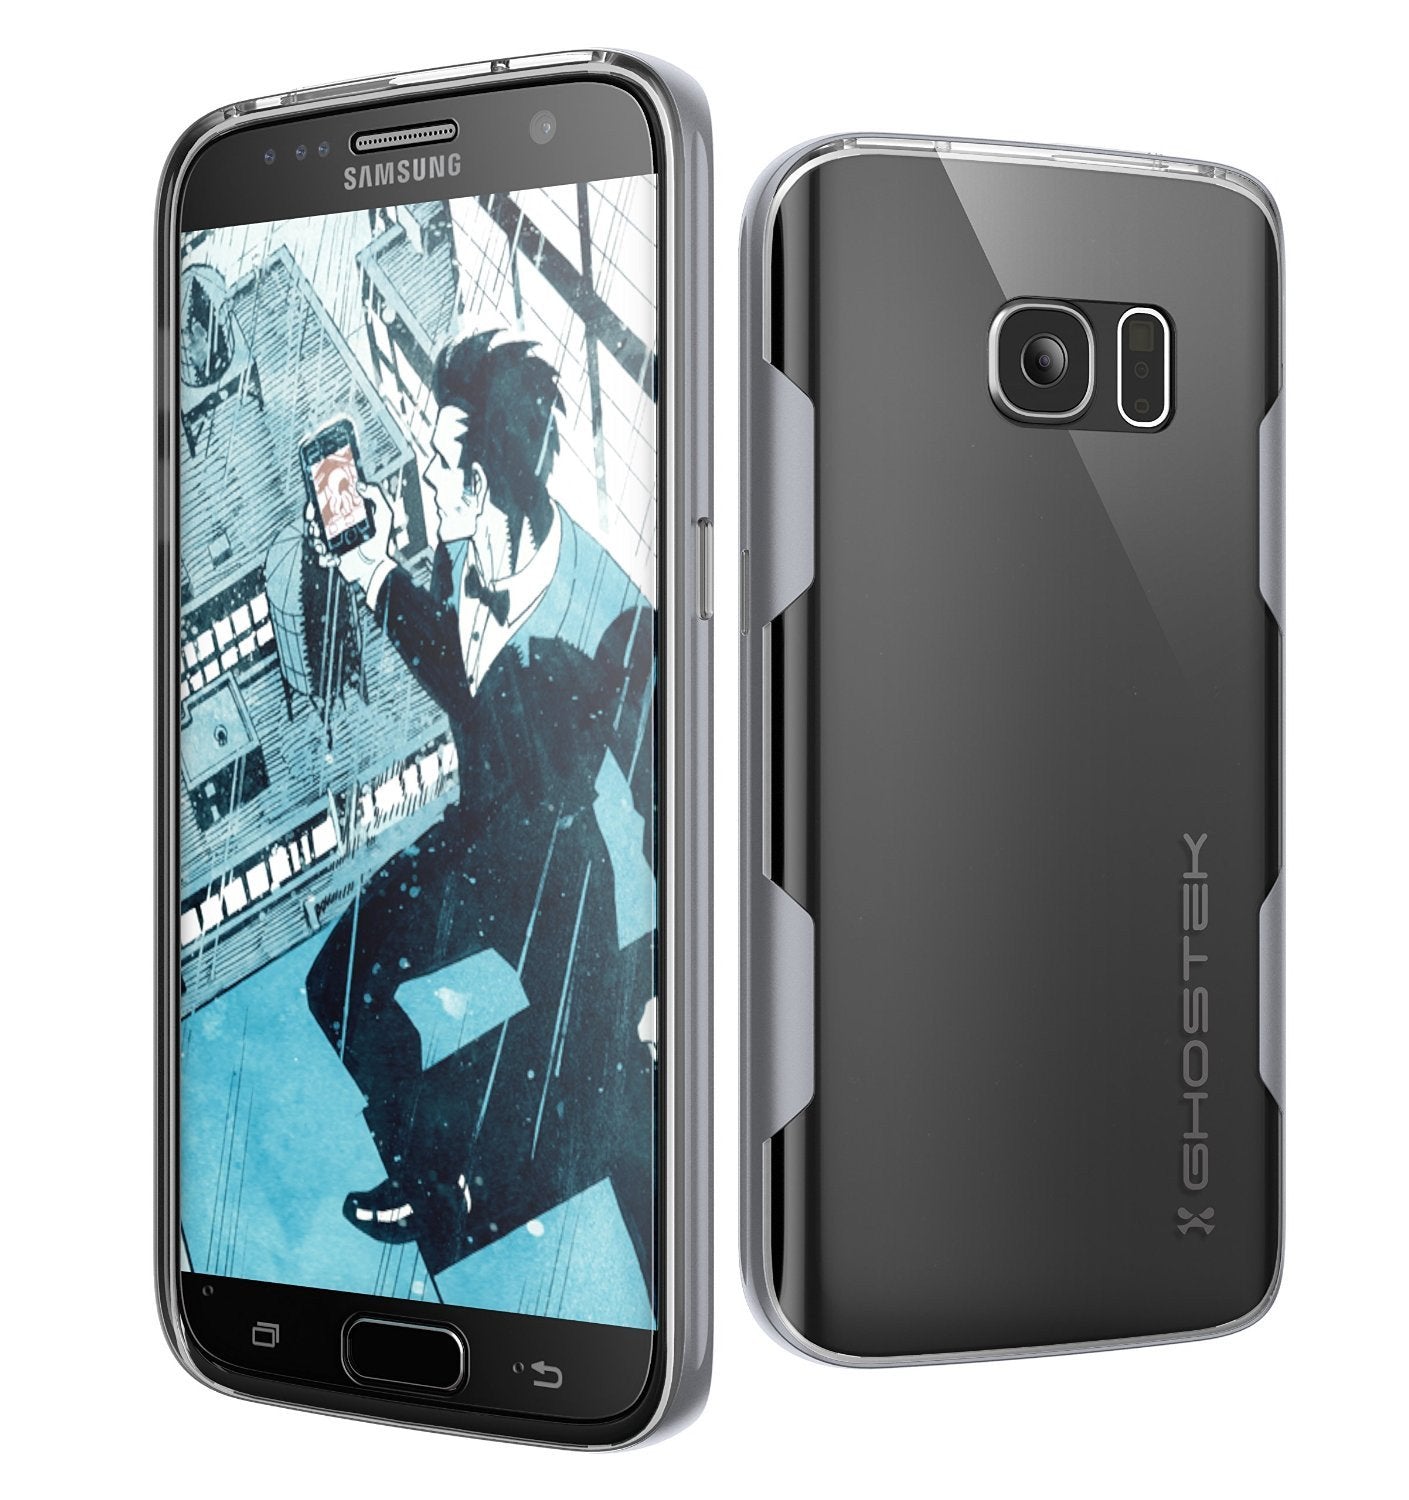 Galaxy S7 Case, Ghostek Cloak Series Silver  Slim Premium Protective Hybrid Impact Glass Armor